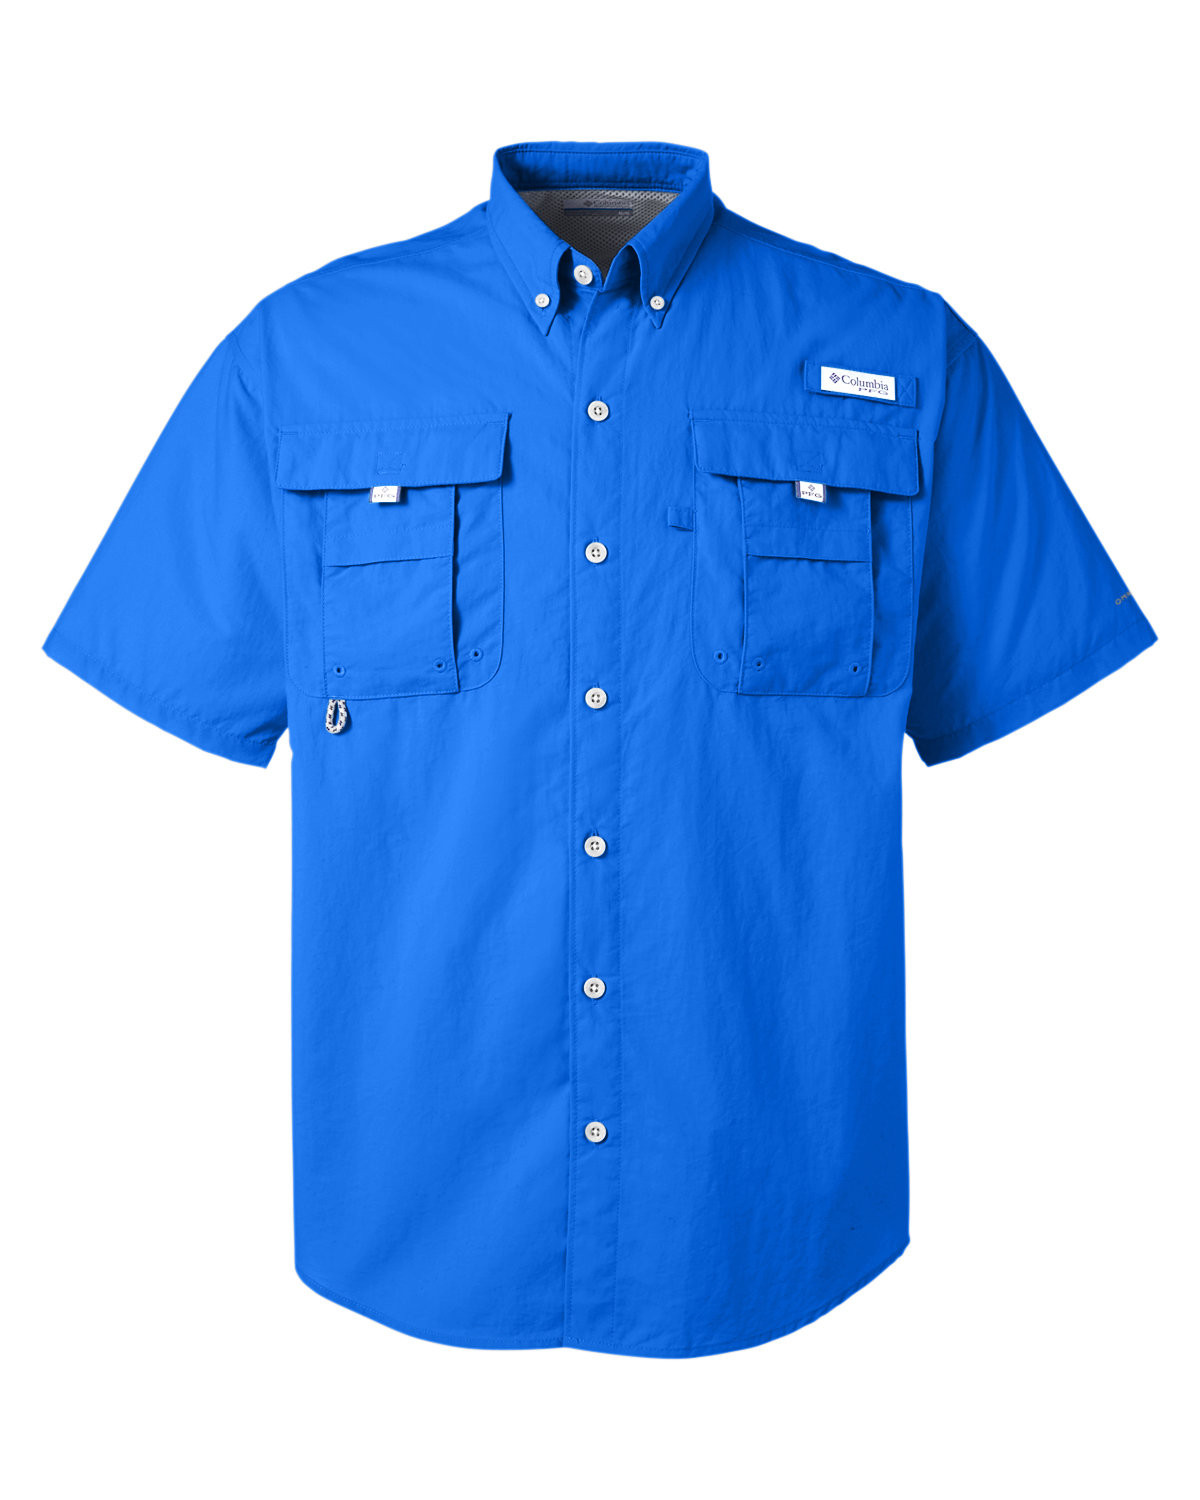 Columbia 7047 - Men's Bahama II Short-Sleeve Shirt - VIVID BLUE - 3XL